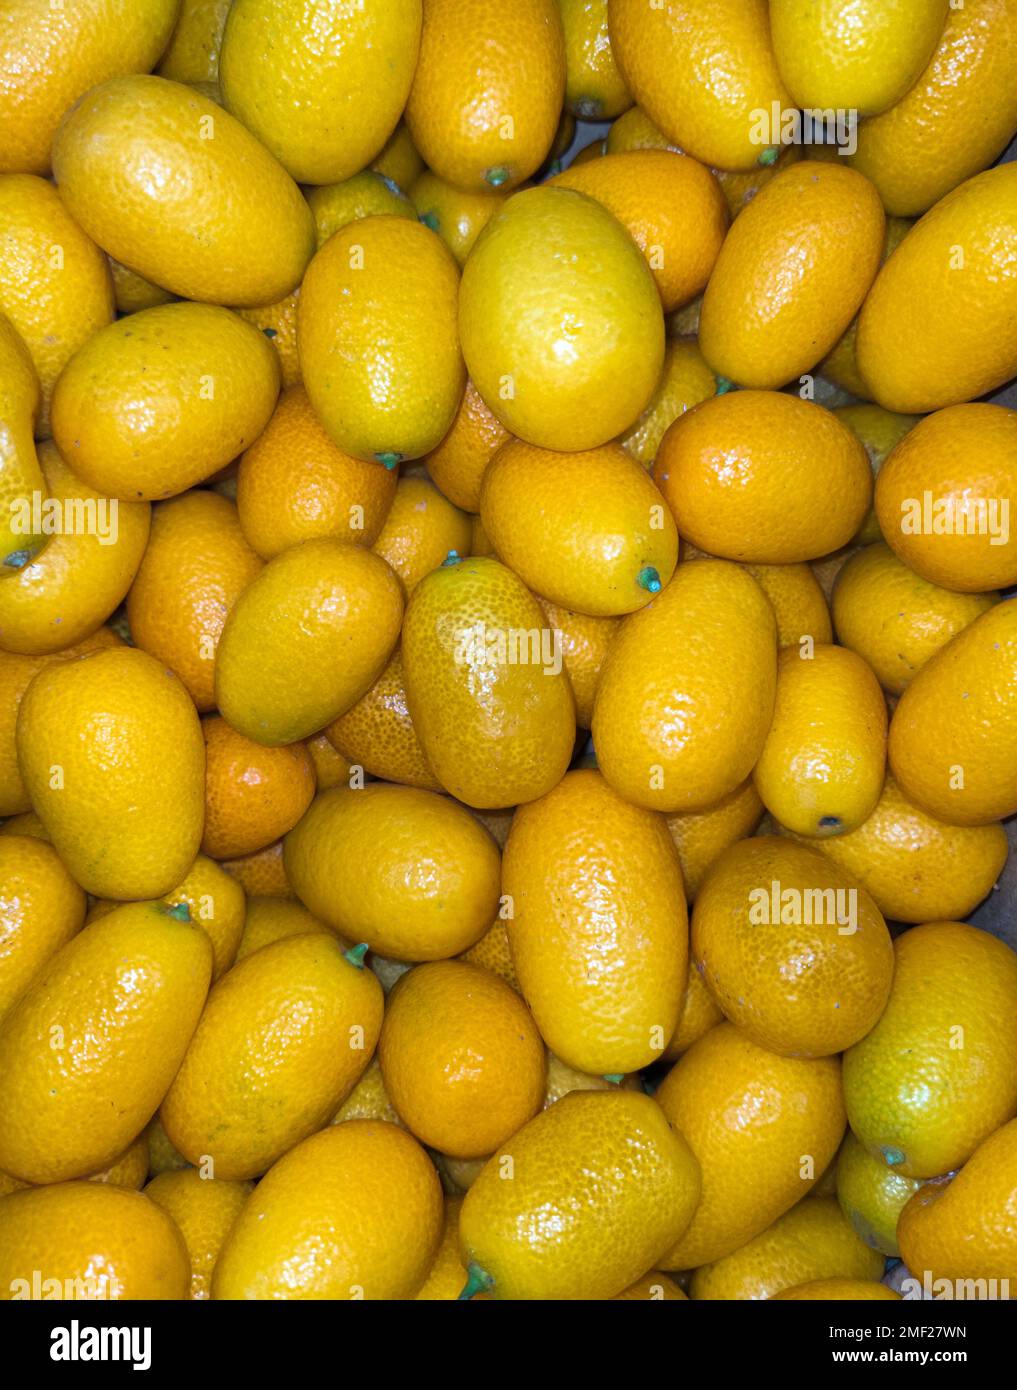 Fortunella kumquat or kinkan - orange citrus fruit, top view Stock Photo